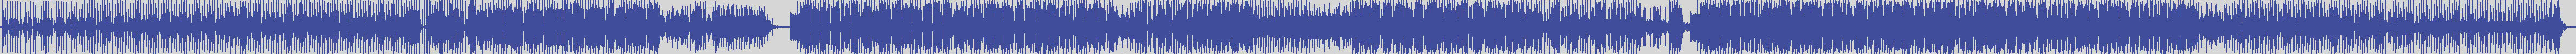 atomic_recordings [AR012] King Bisquit - Der Kommissar [Original Mix] audio wave form